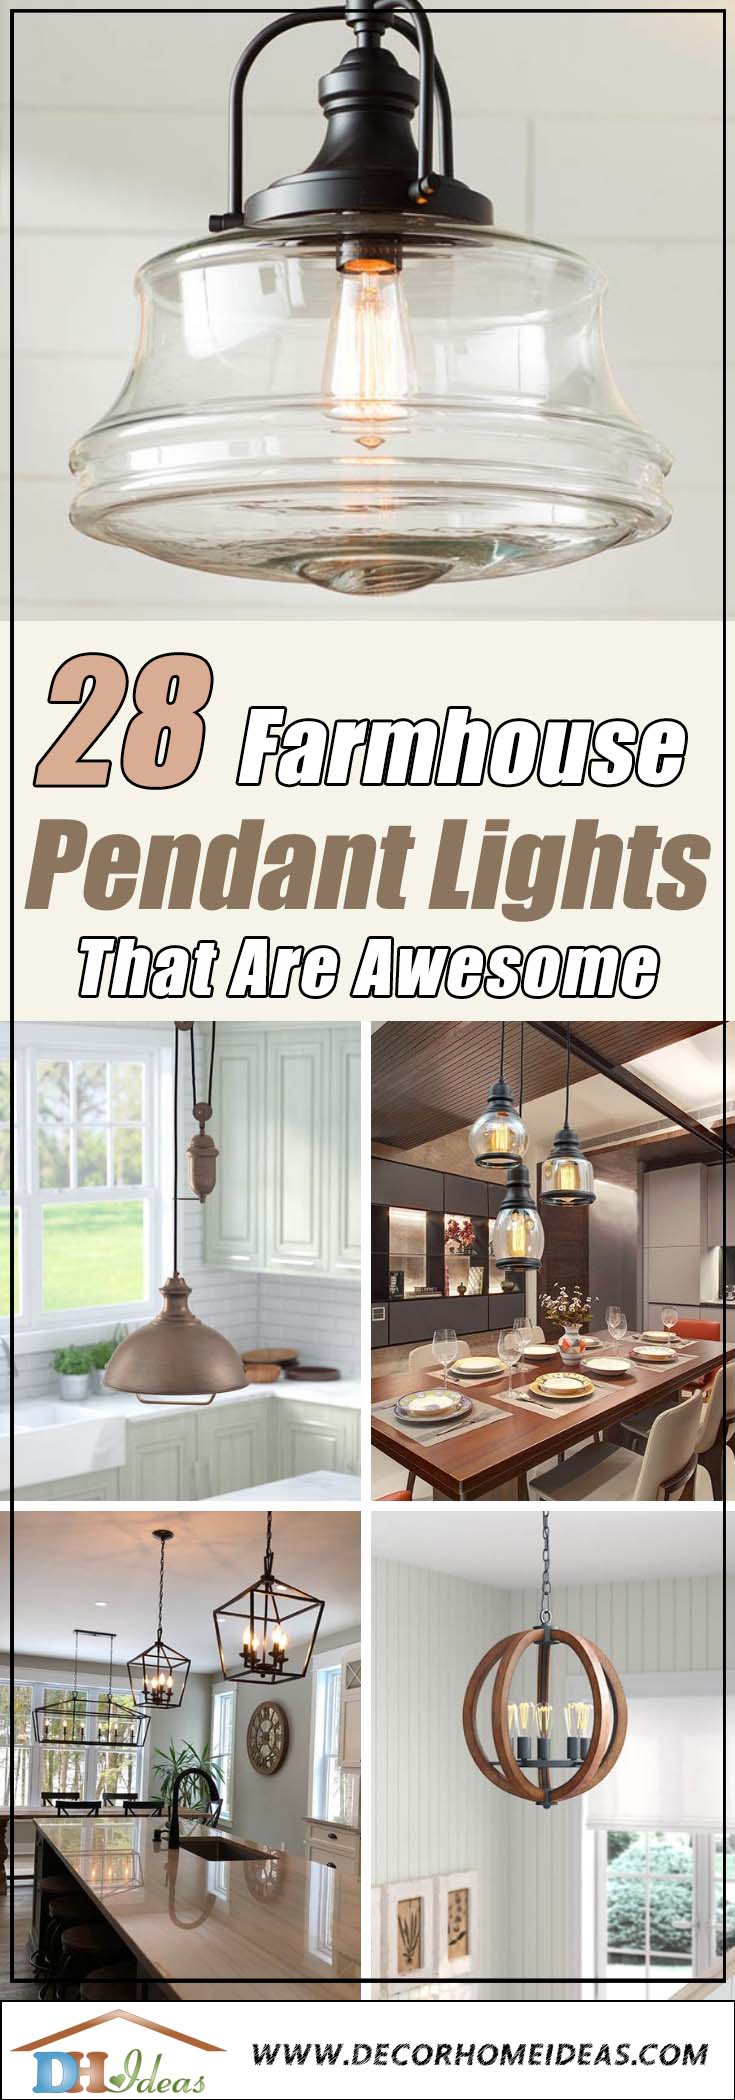 Farmhouse Pendant Lights #farmhouse #pendant #lights #decorhomeideas